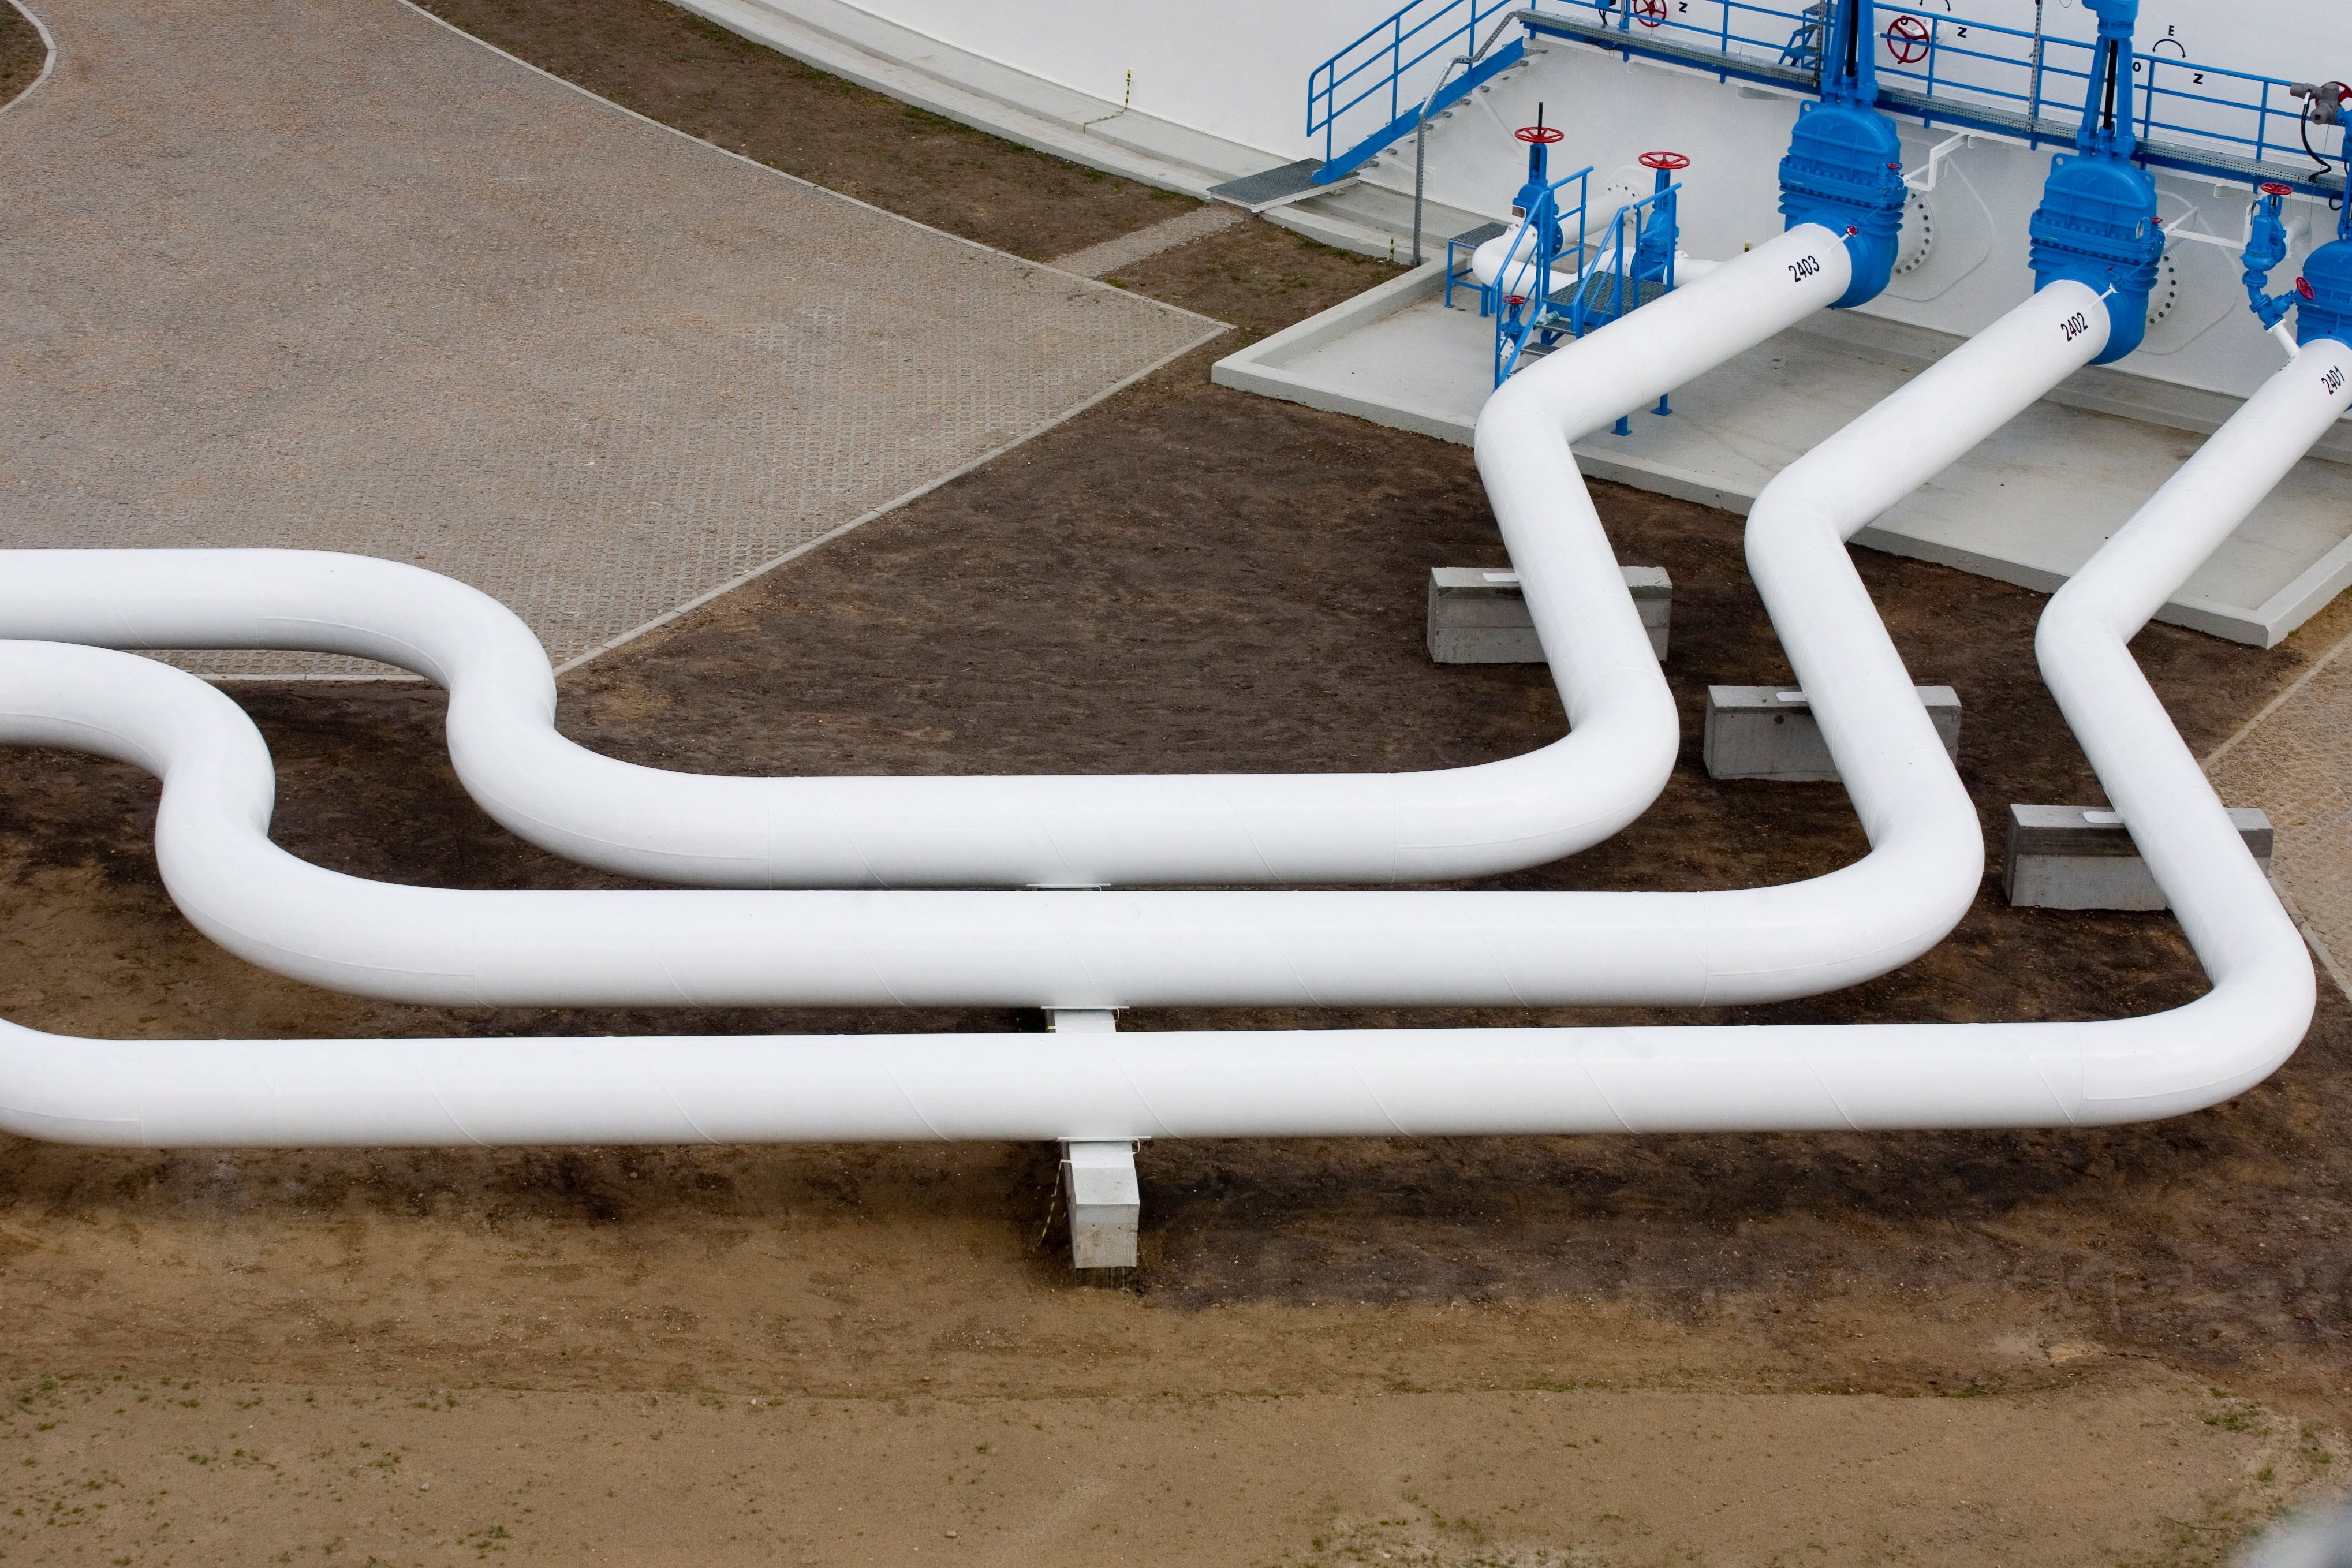 Oil pumping station of Druzhba pipeline in Adamowo